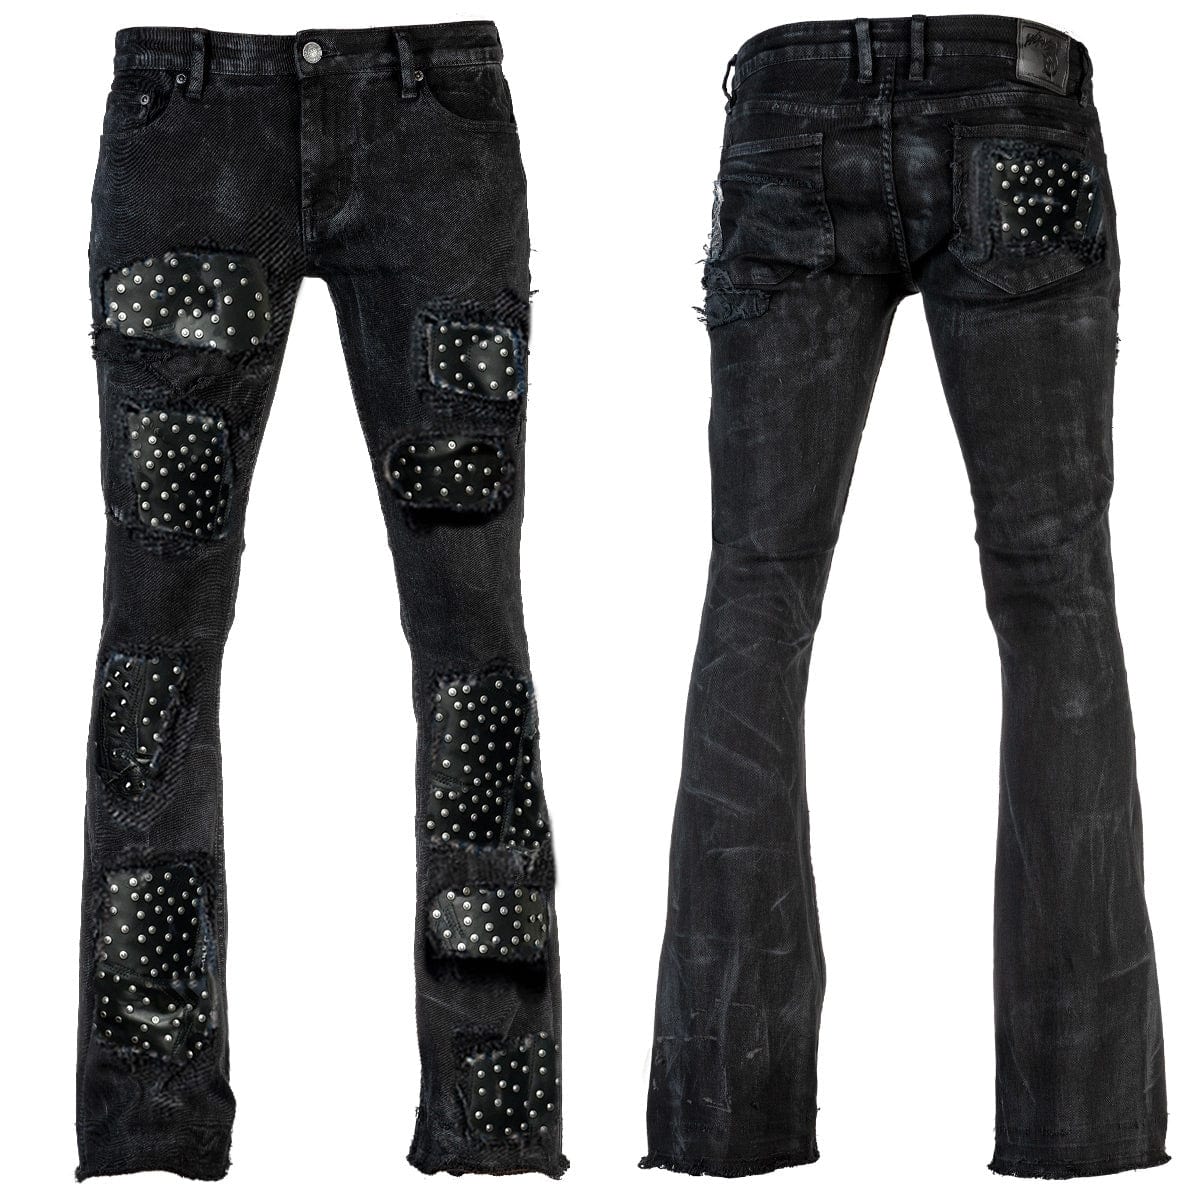 Custom Chop Shop Pants Wornstar Custom - Jeans - Studded Patchwork